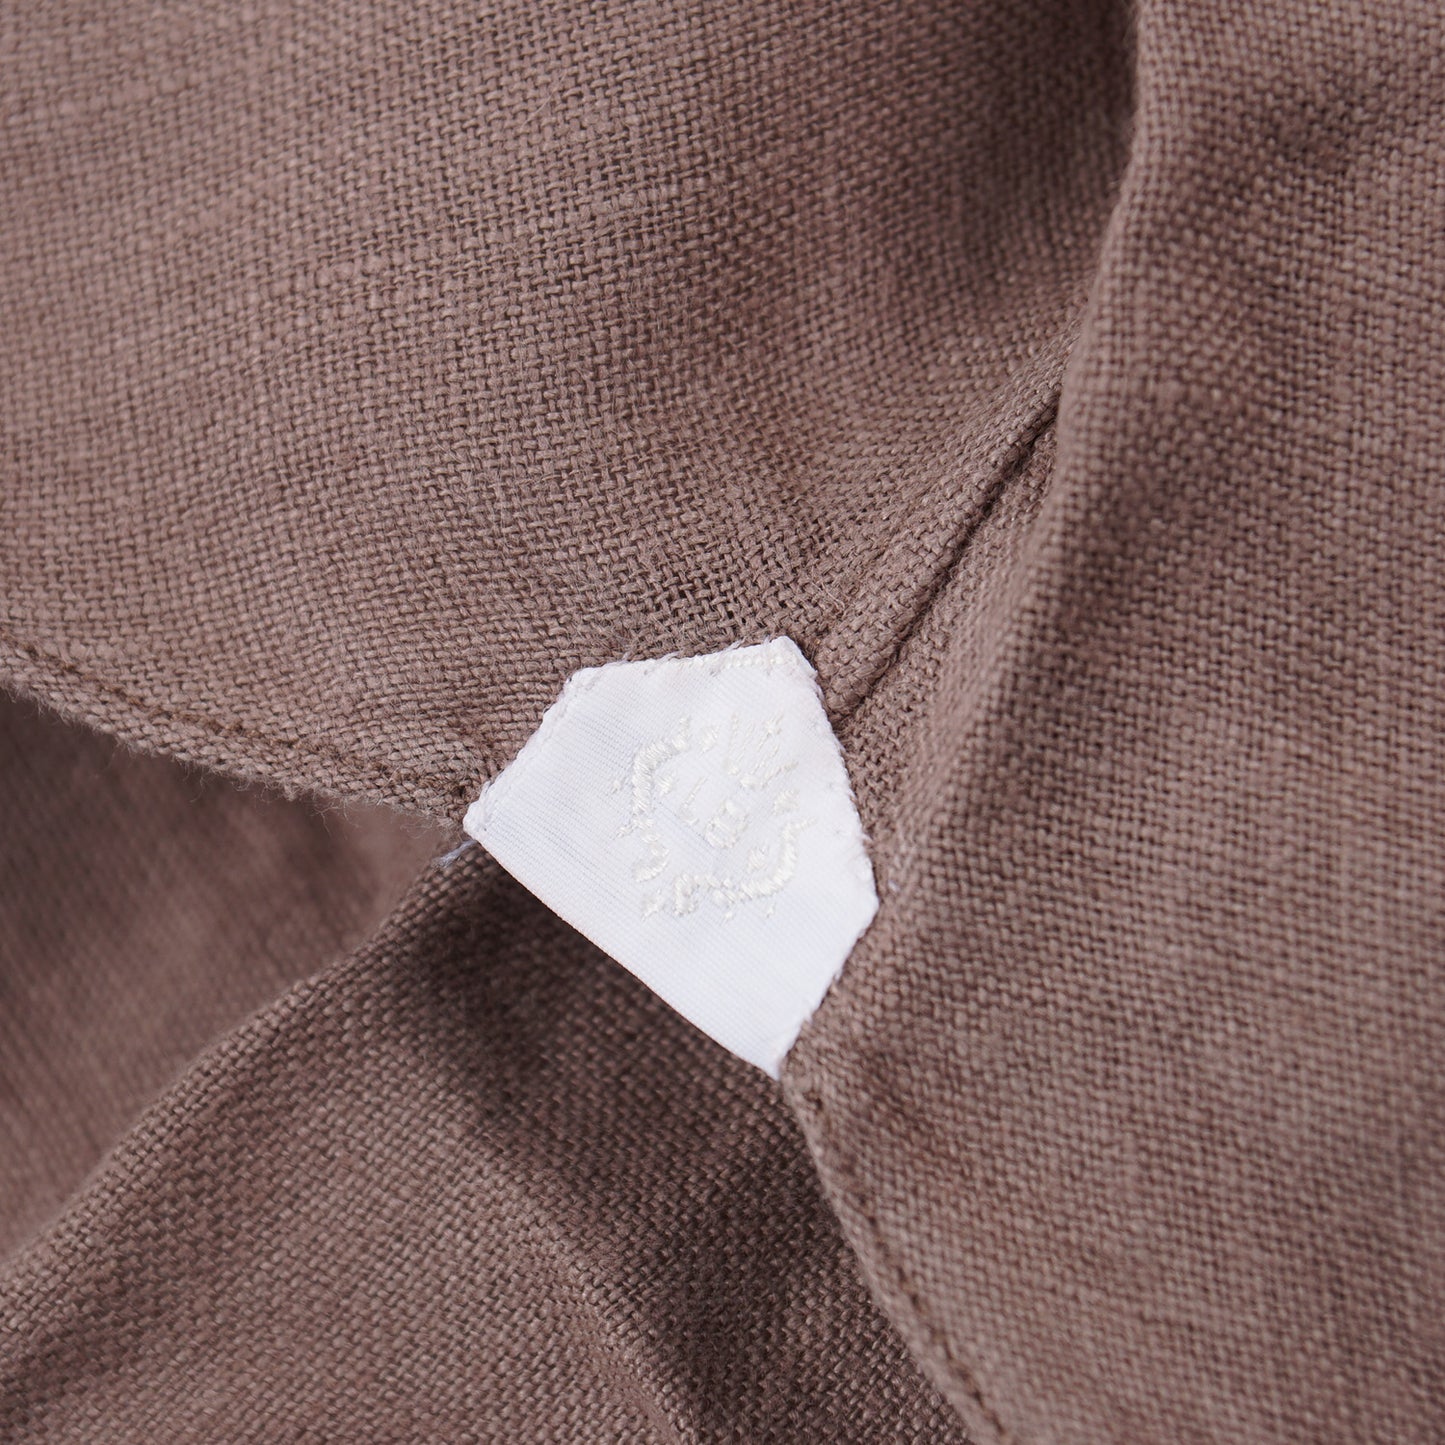 Luigi Borrelli Extrafine Linen Shirt - Top Shelf Apparel